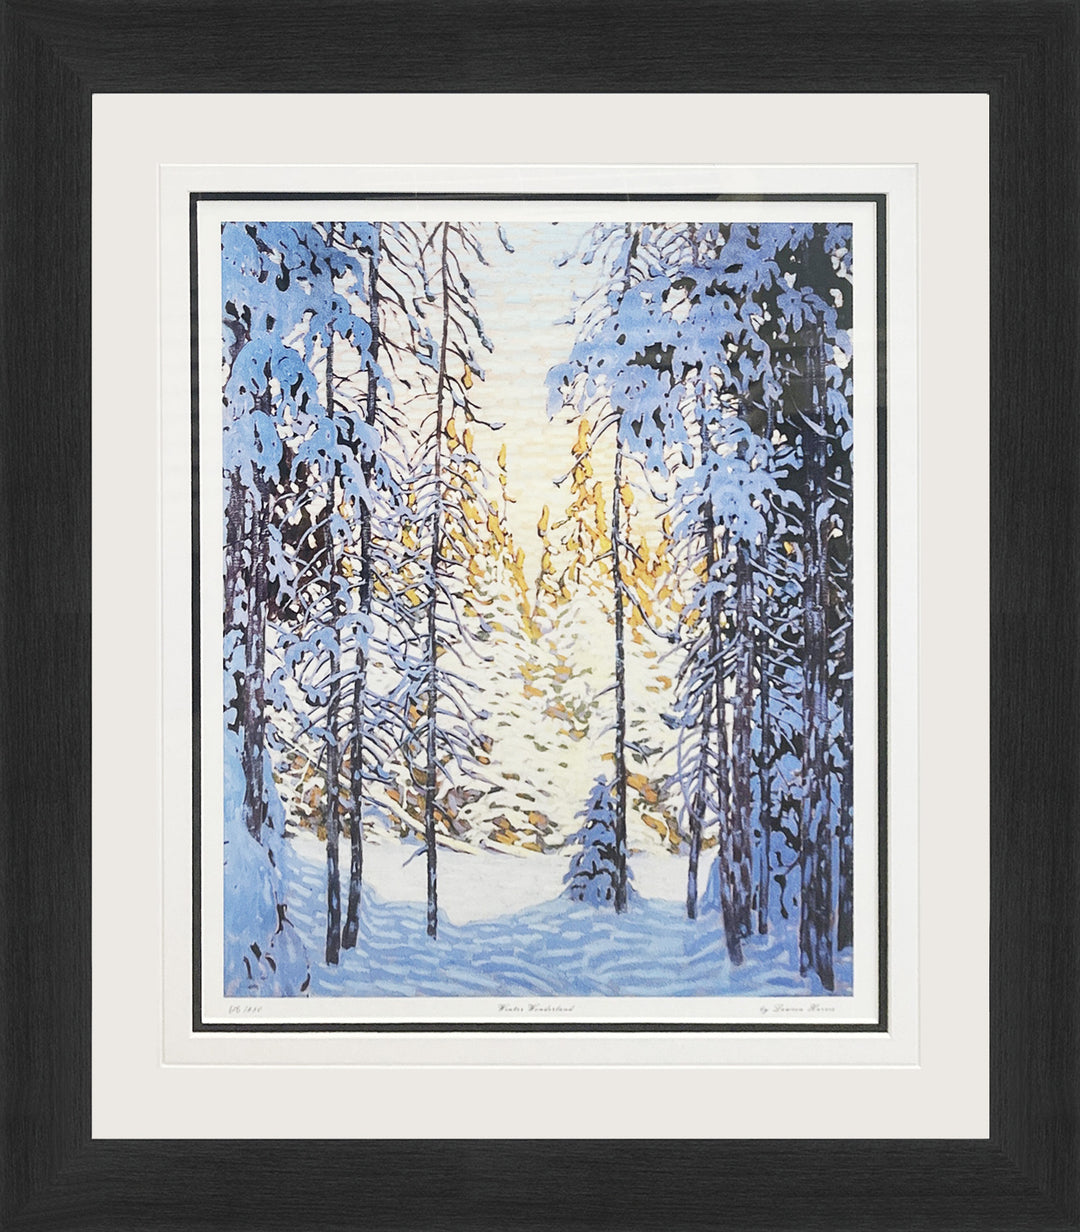 Lawren Harris "Winter Wonderland" Group Of Seven Art Print Framed Ltd Ed, Group of Seven Canadian Artists, Canadian Art, Art, Collectibile Memorabilia, AAAPA32924